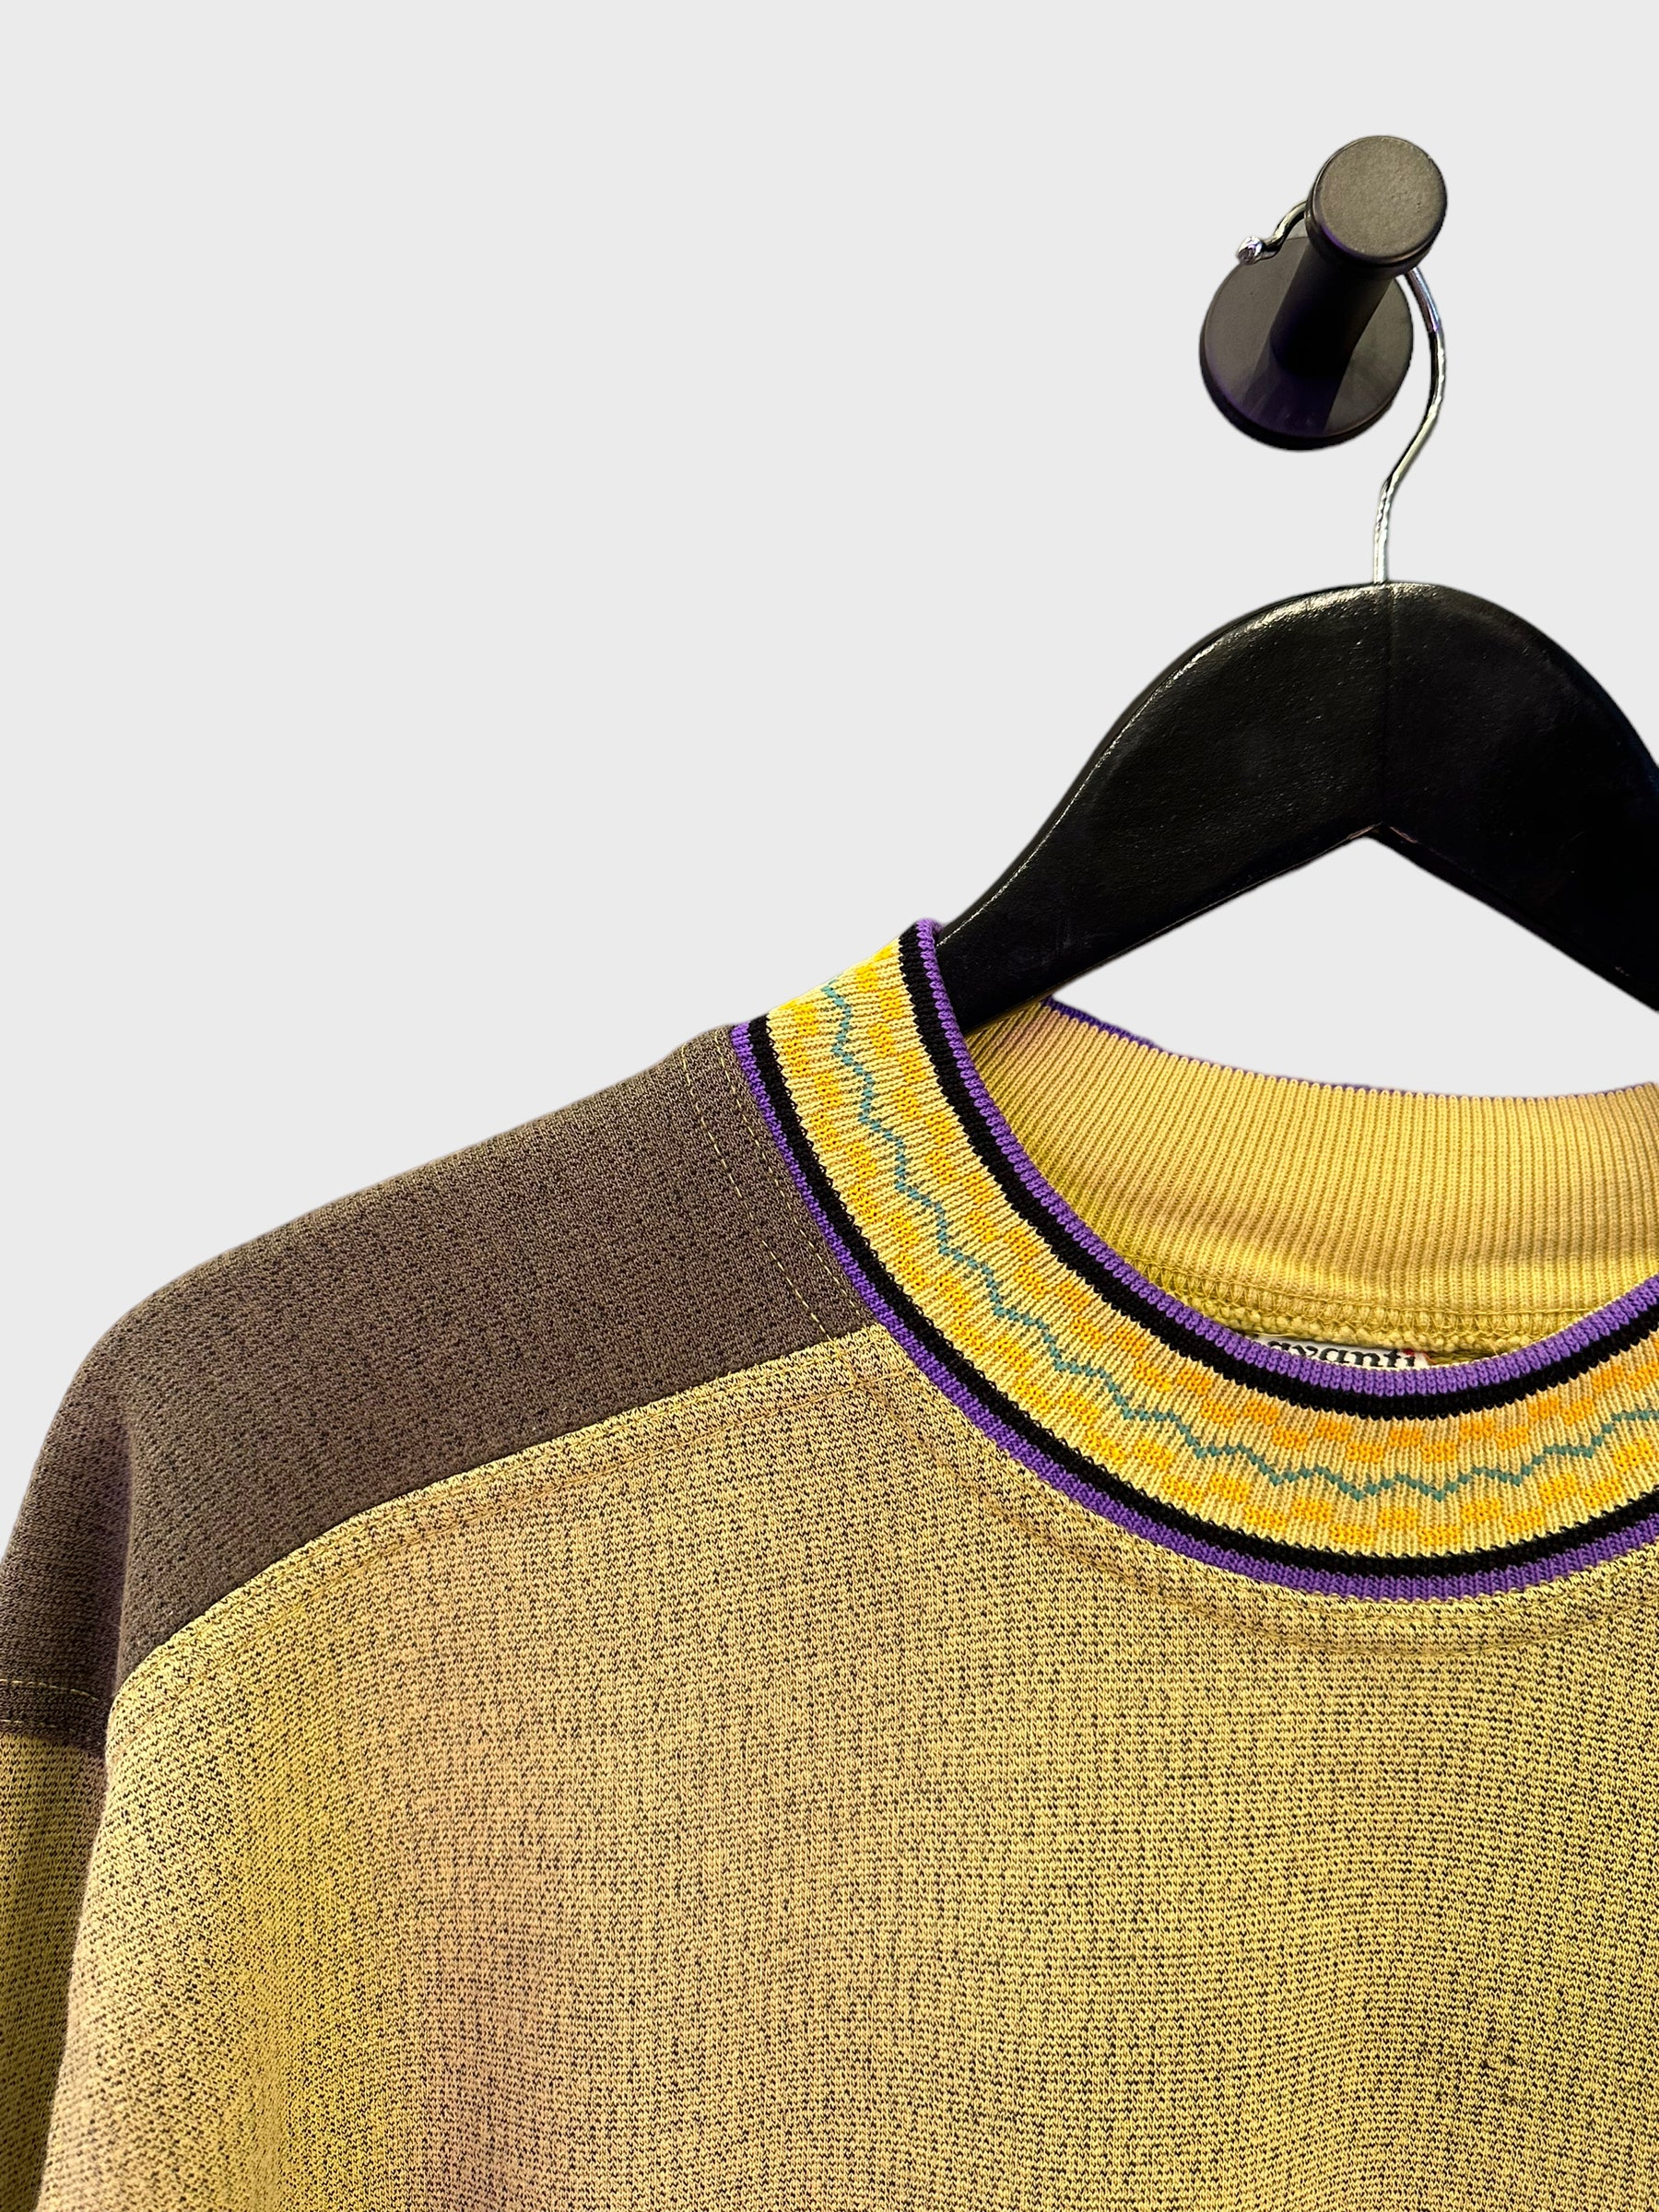 Vintage patterned sweater